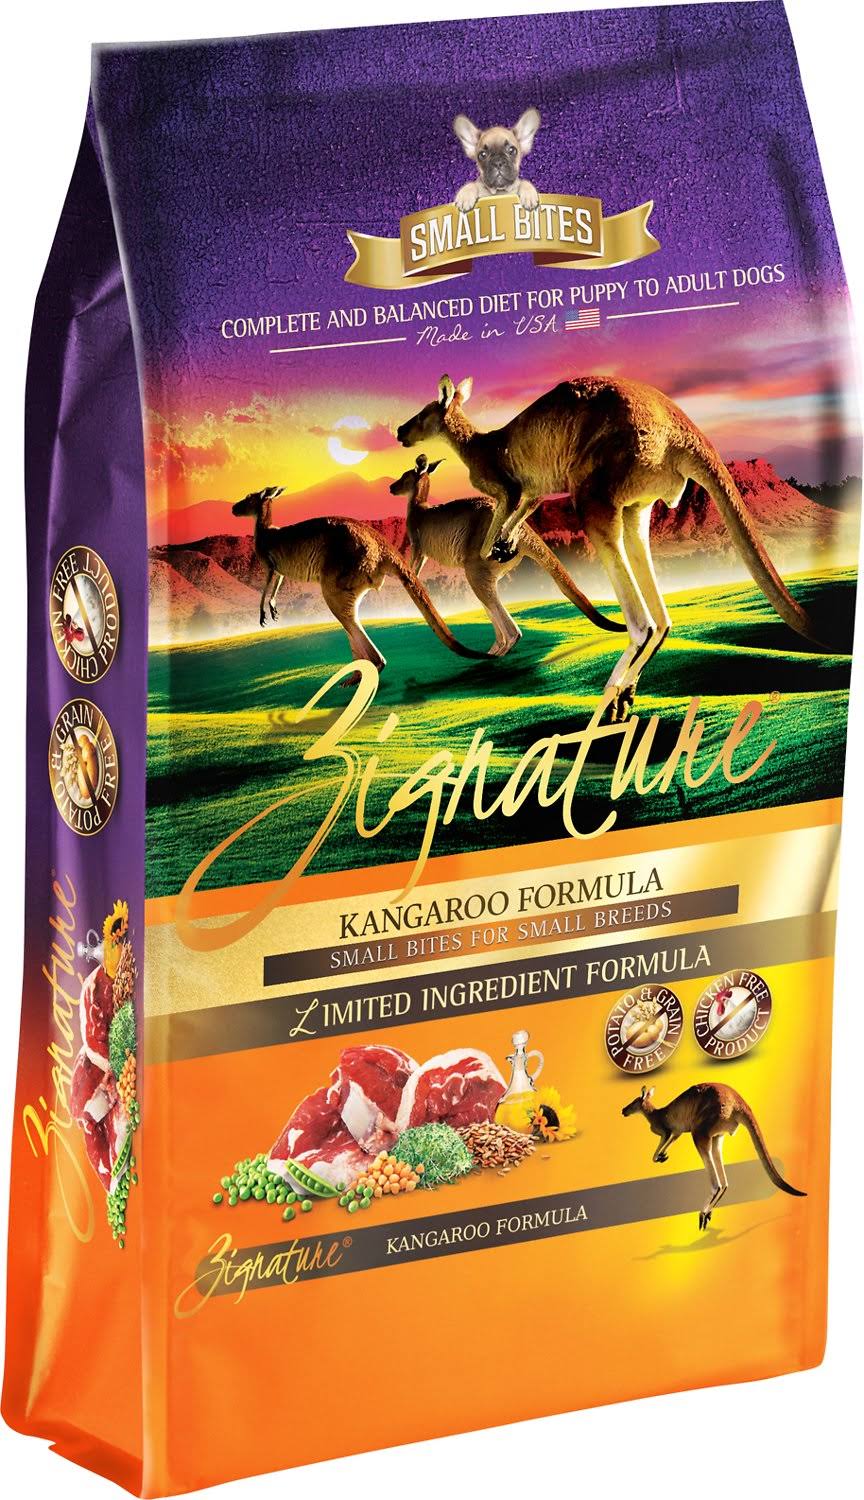 Zignature Kangaroo Formula Small Bites Dry Dog Food, 12.5-lb